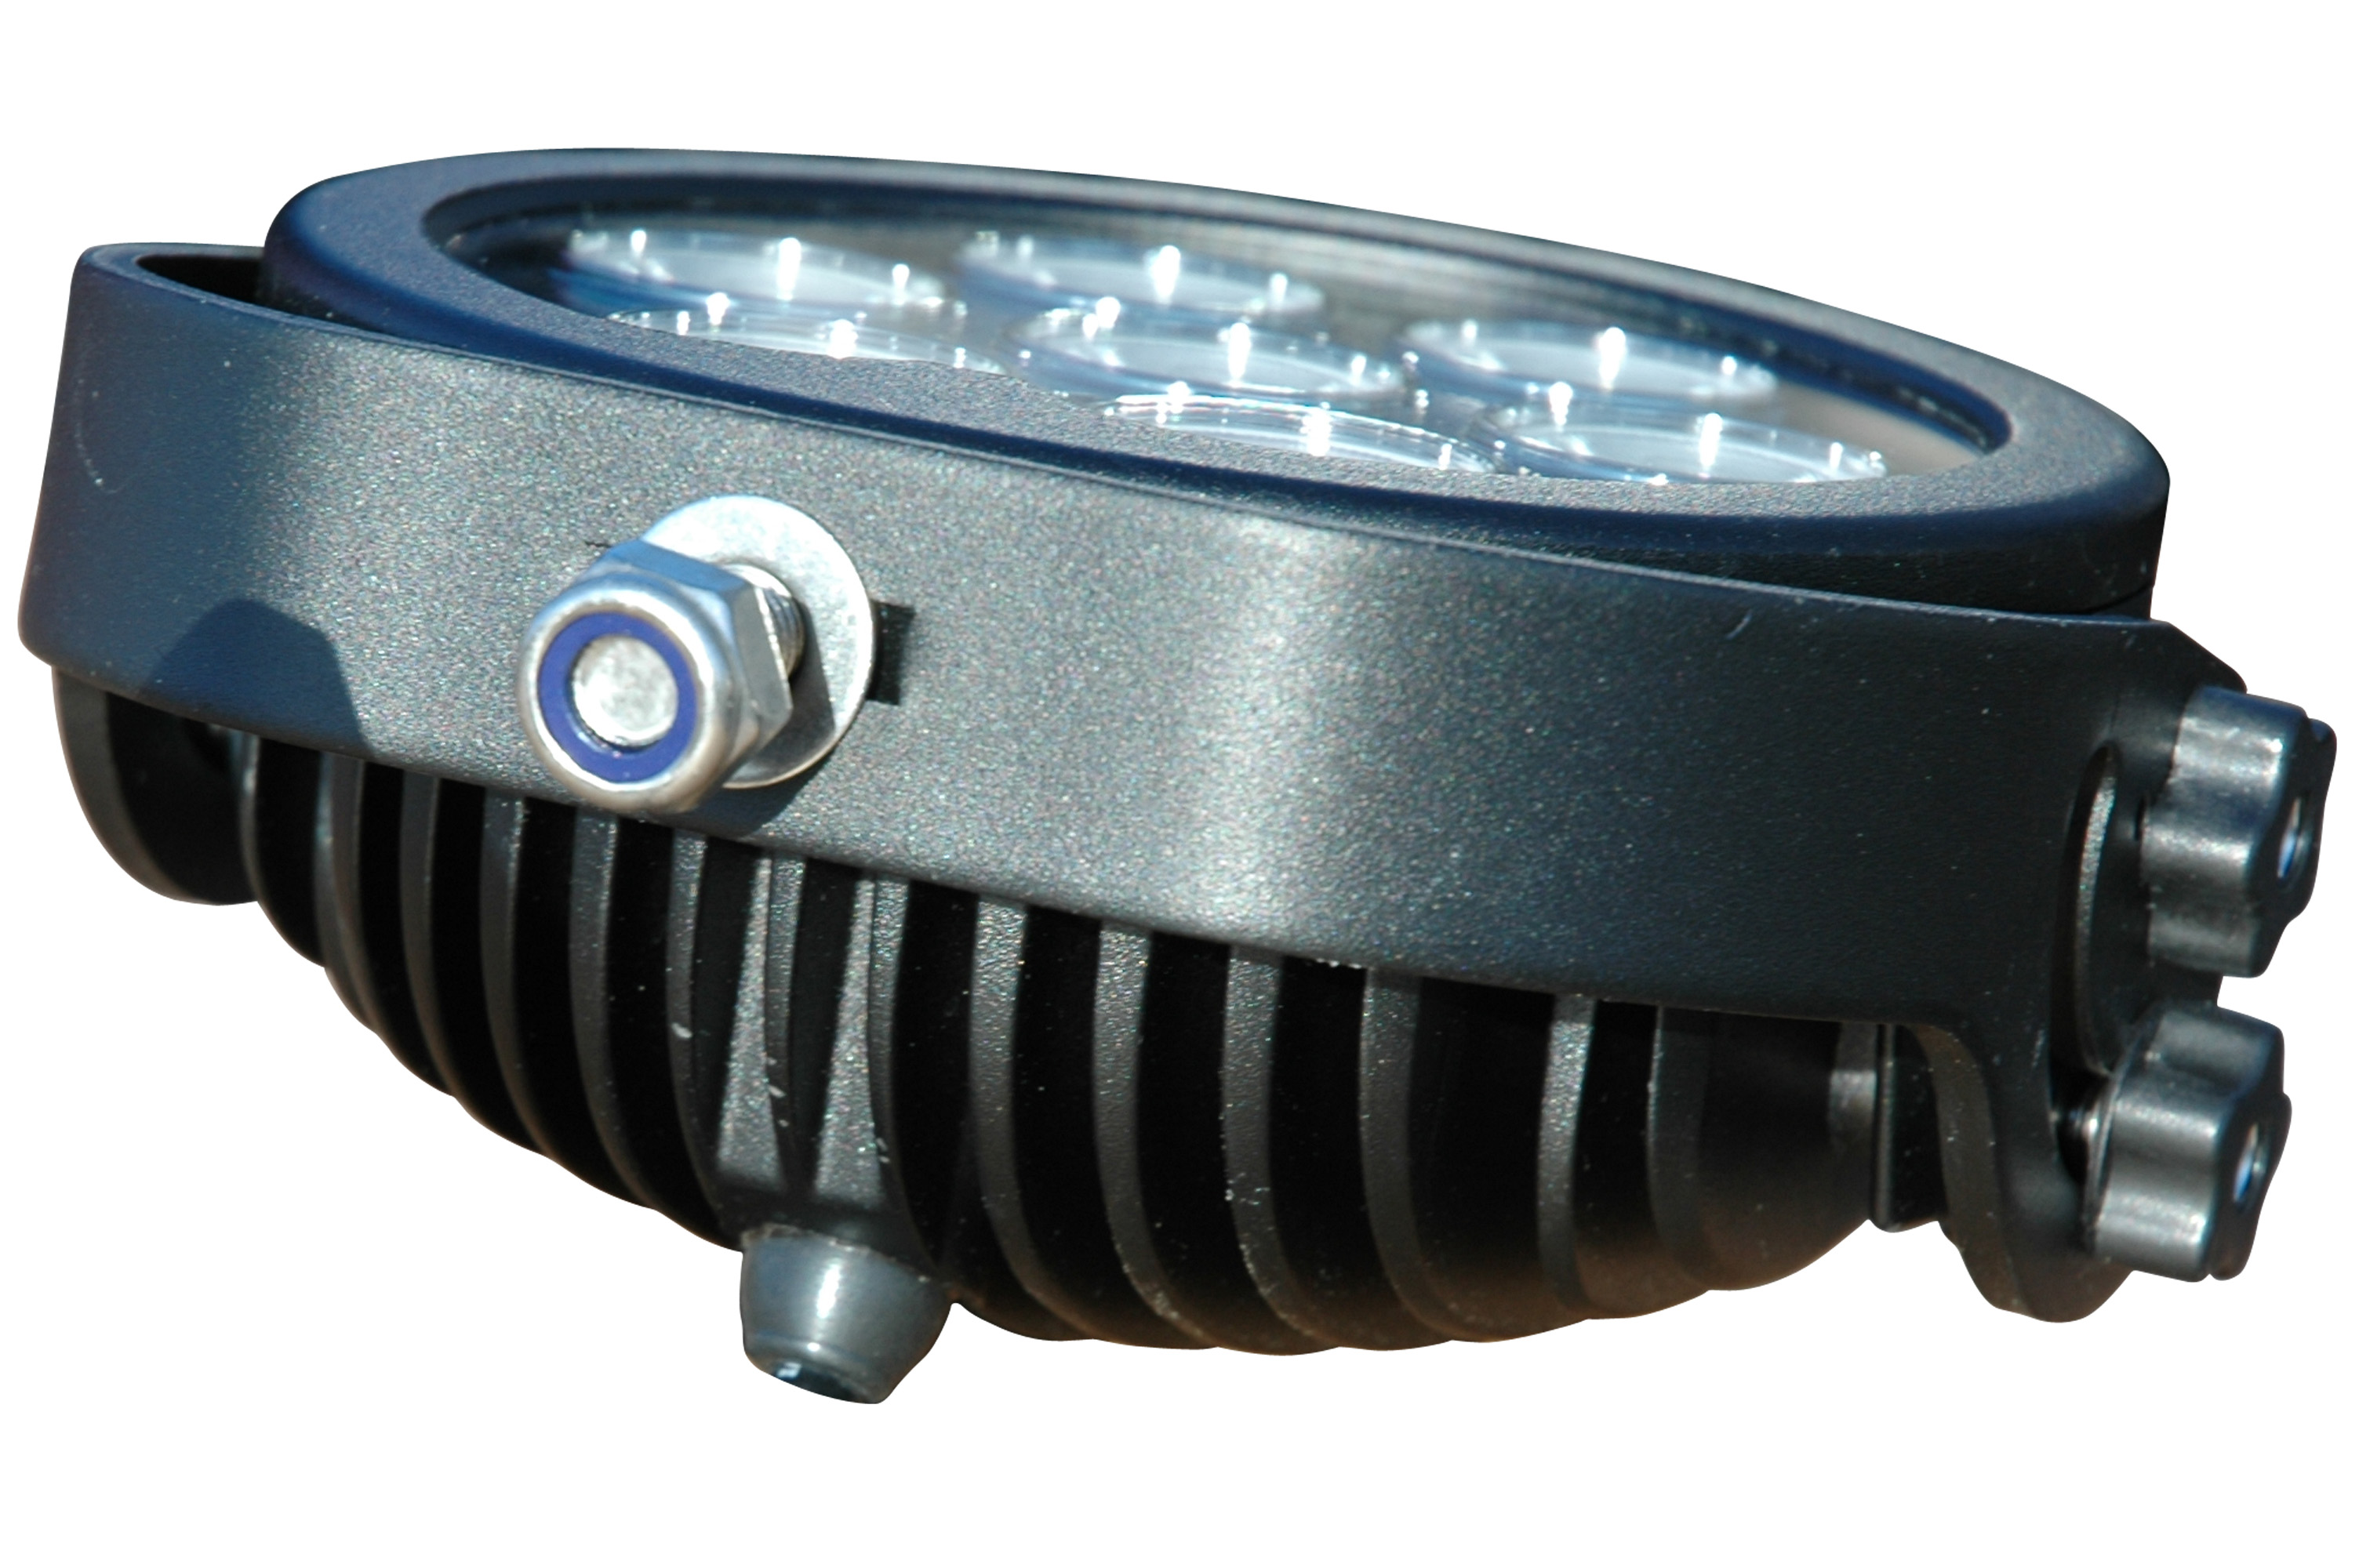 LED-BL-70W LED Boat Light from Larson Electronics’